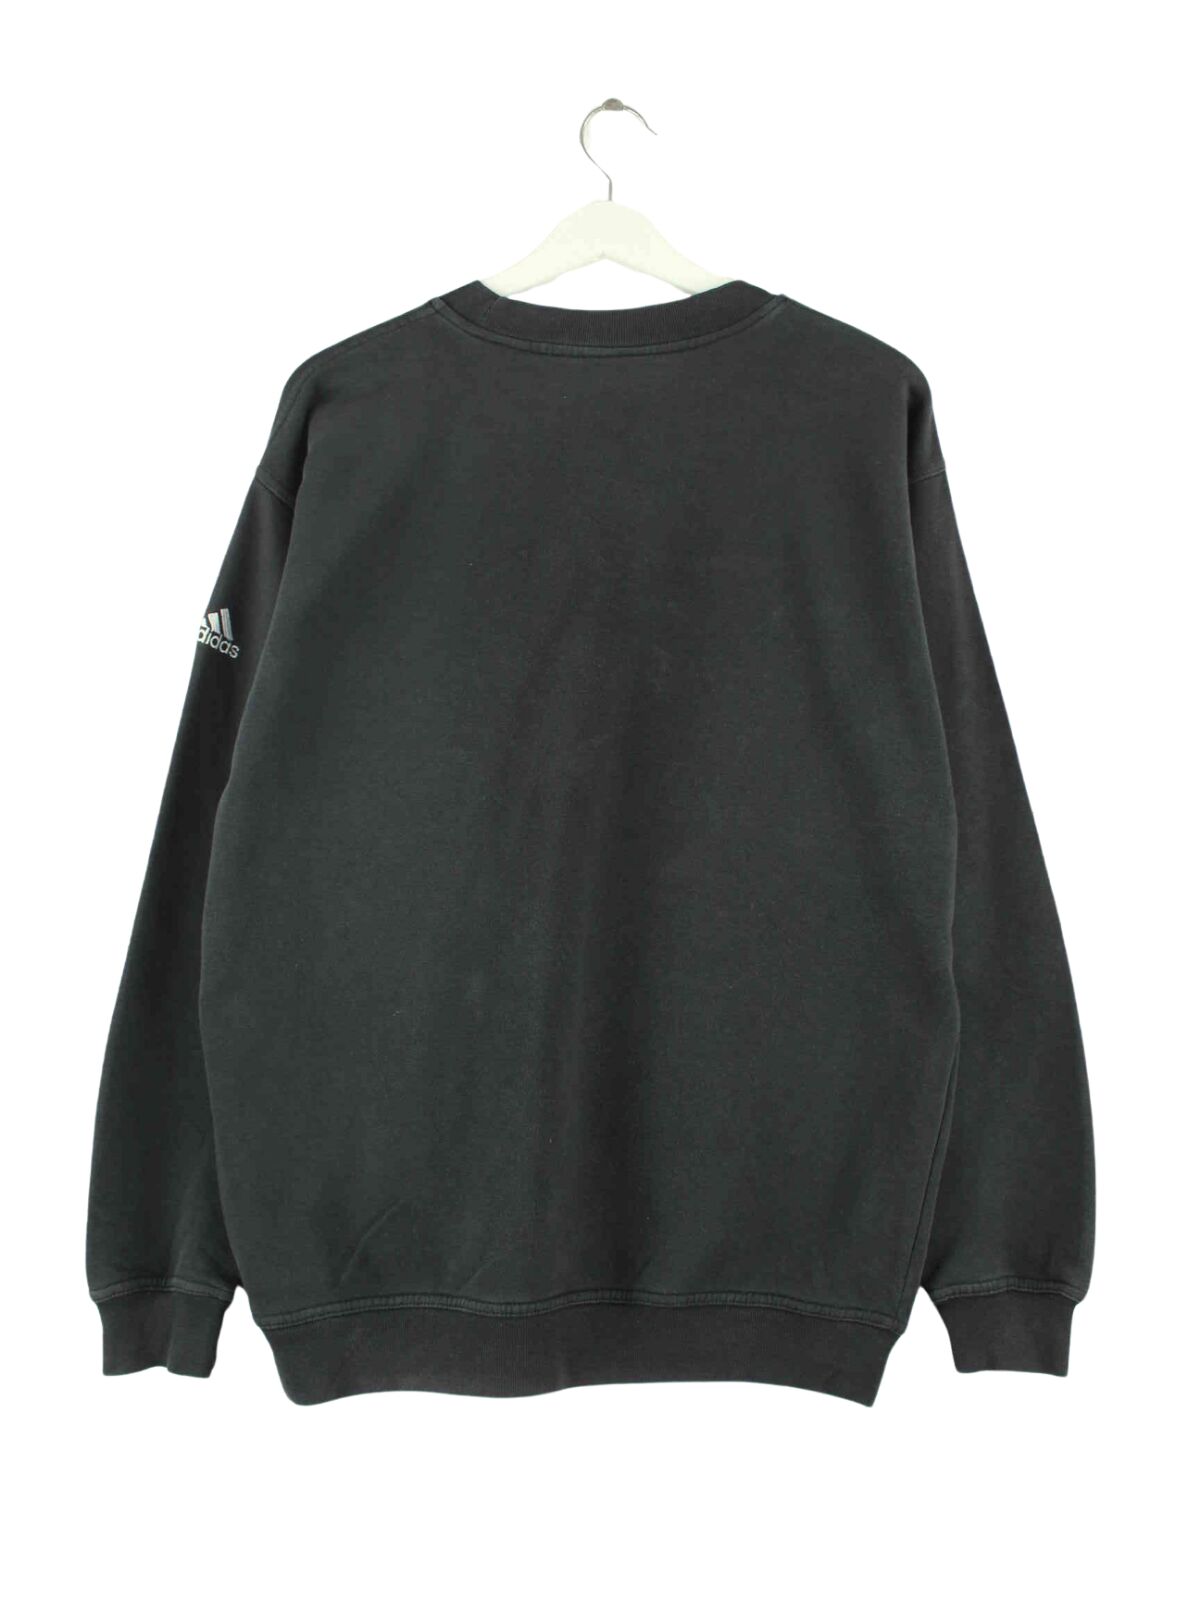 Adidas 90s Vintage Basic Embroidered Sweater Schwarz M (back image)